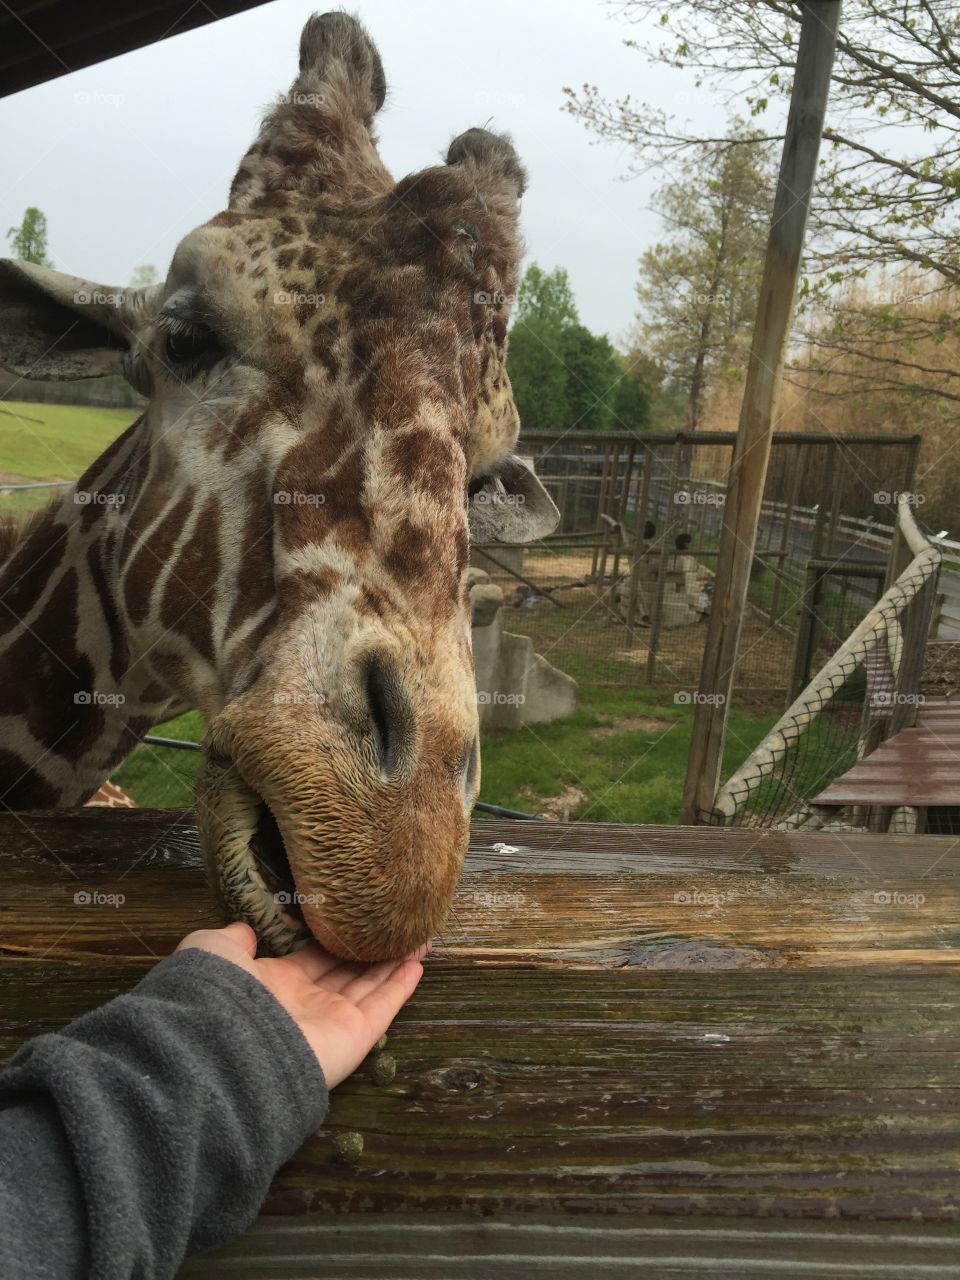 Feeding the giraffes at Metro Richmond Zoo 